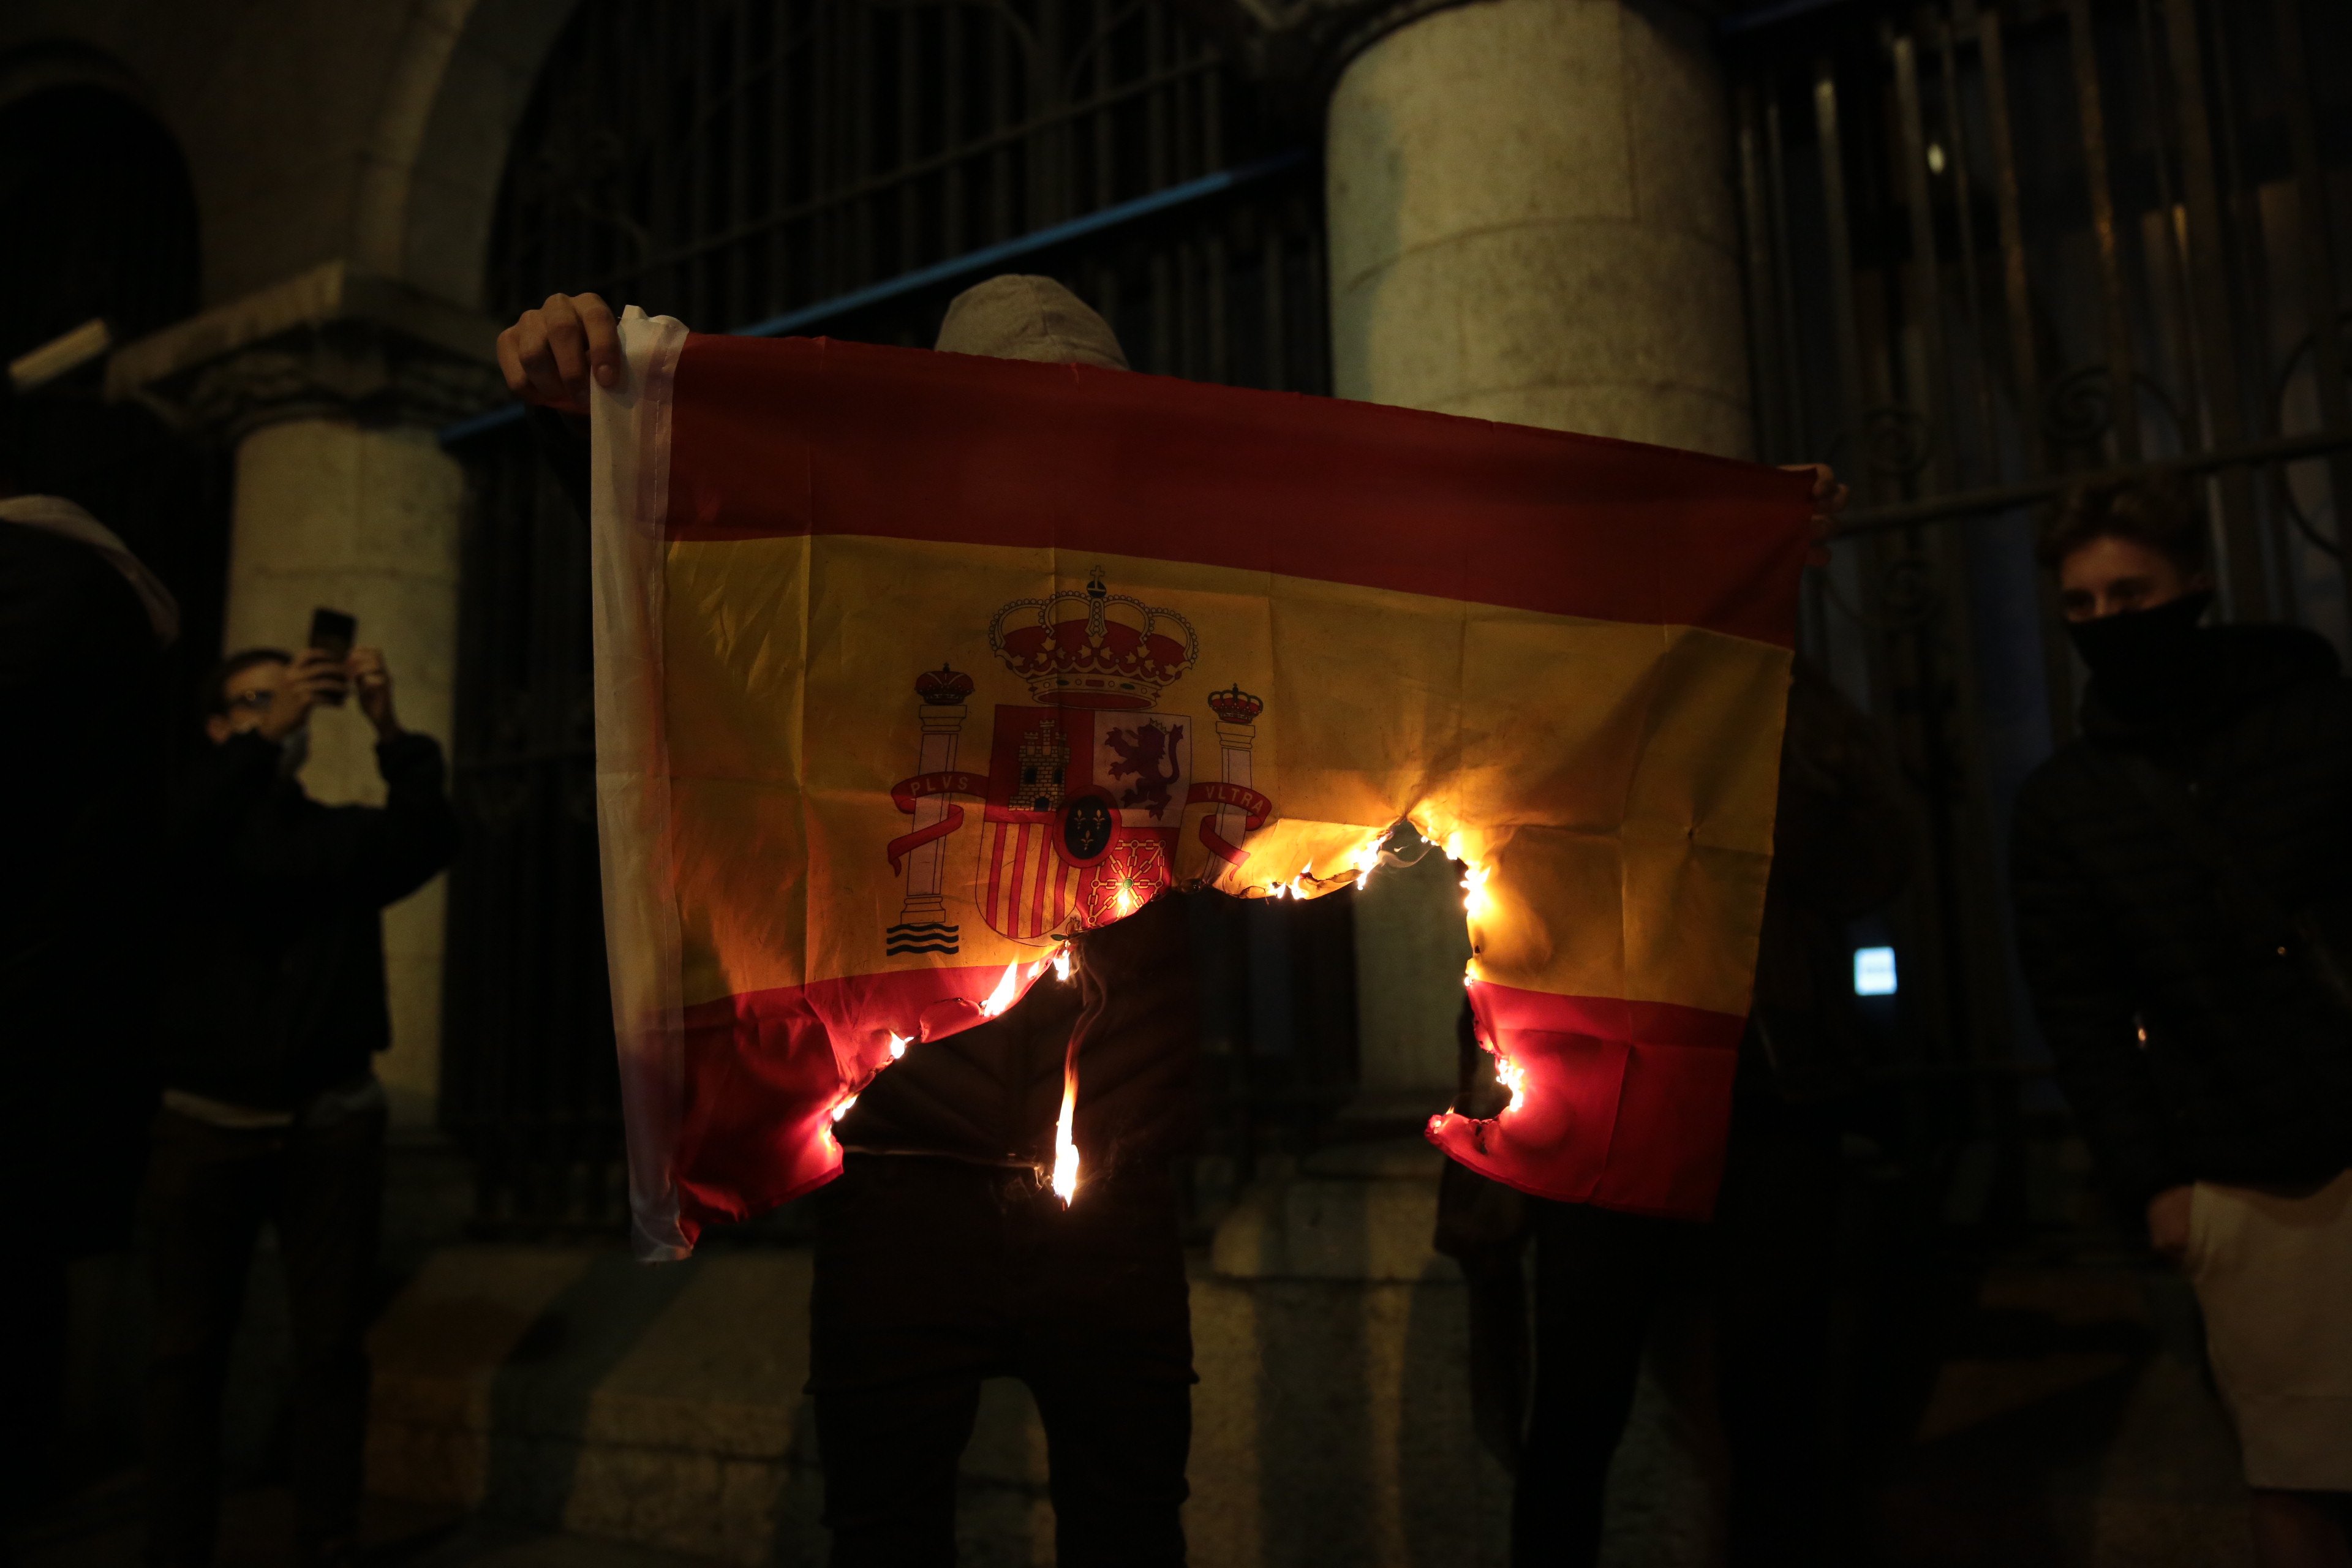 CDR via laietana 1 any sentencia cremen bandera espanyola - Sergi Alcàzar